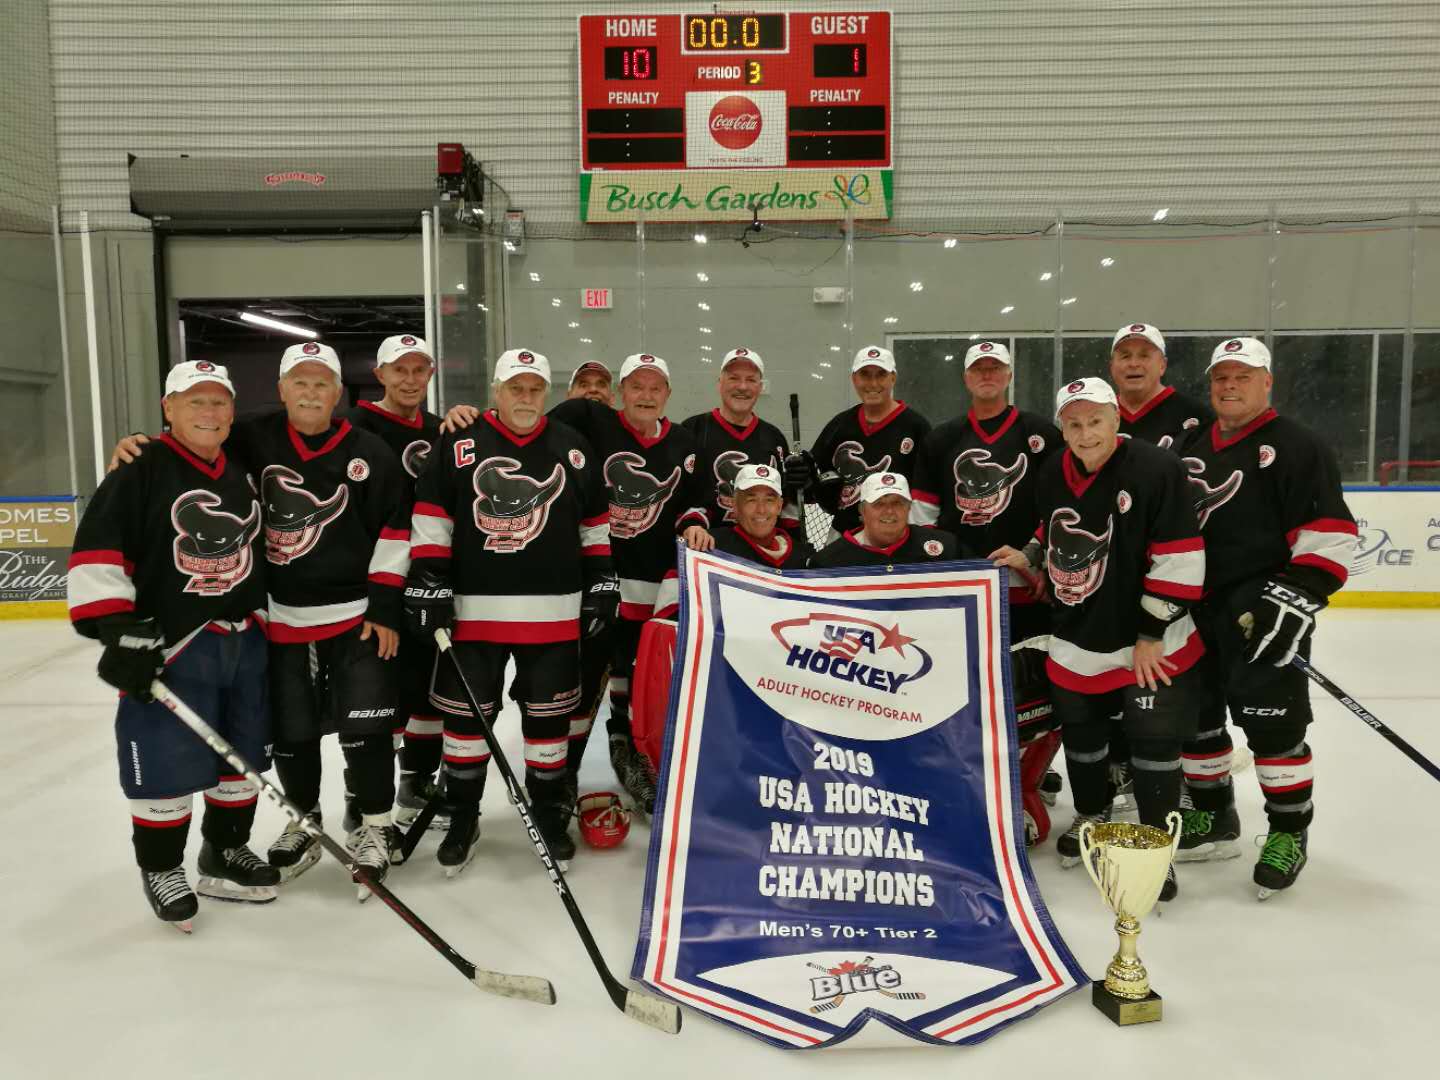 Michigan Sting 70 Plus 2019 USA Hockey National Champions